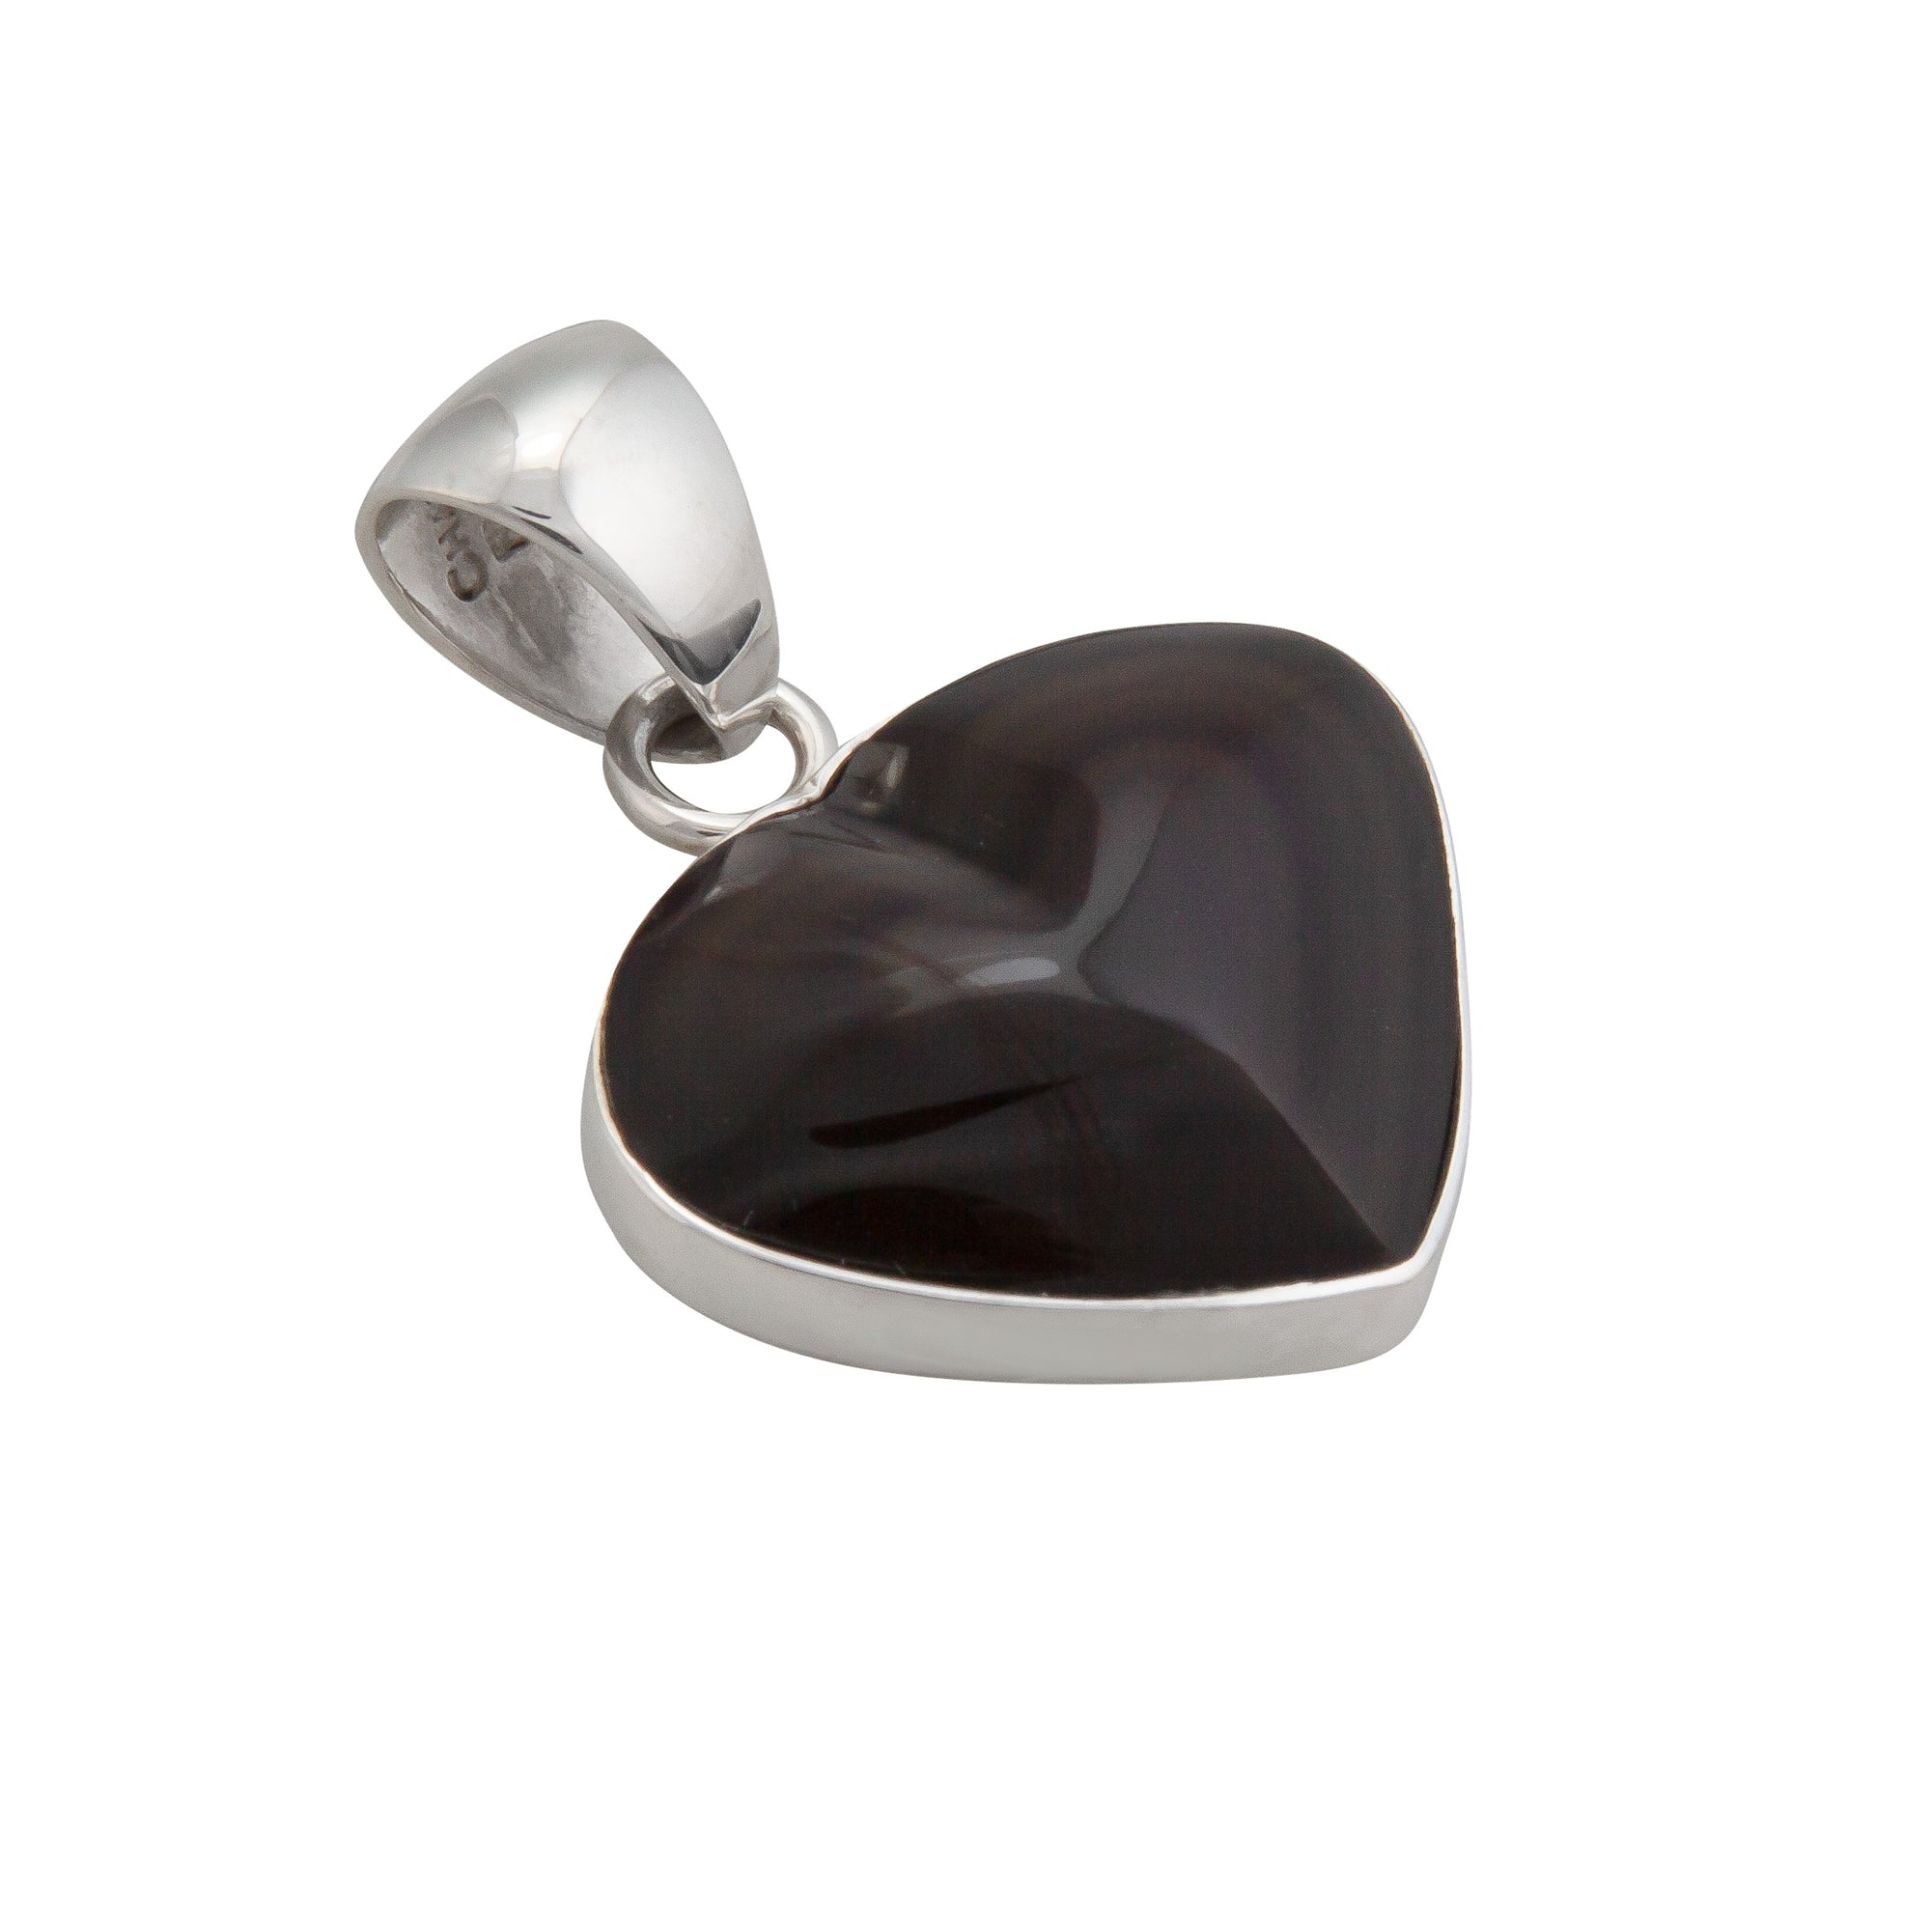 Sterling Silver Obsidian Heart Pendant | Charles Albert Jewelry